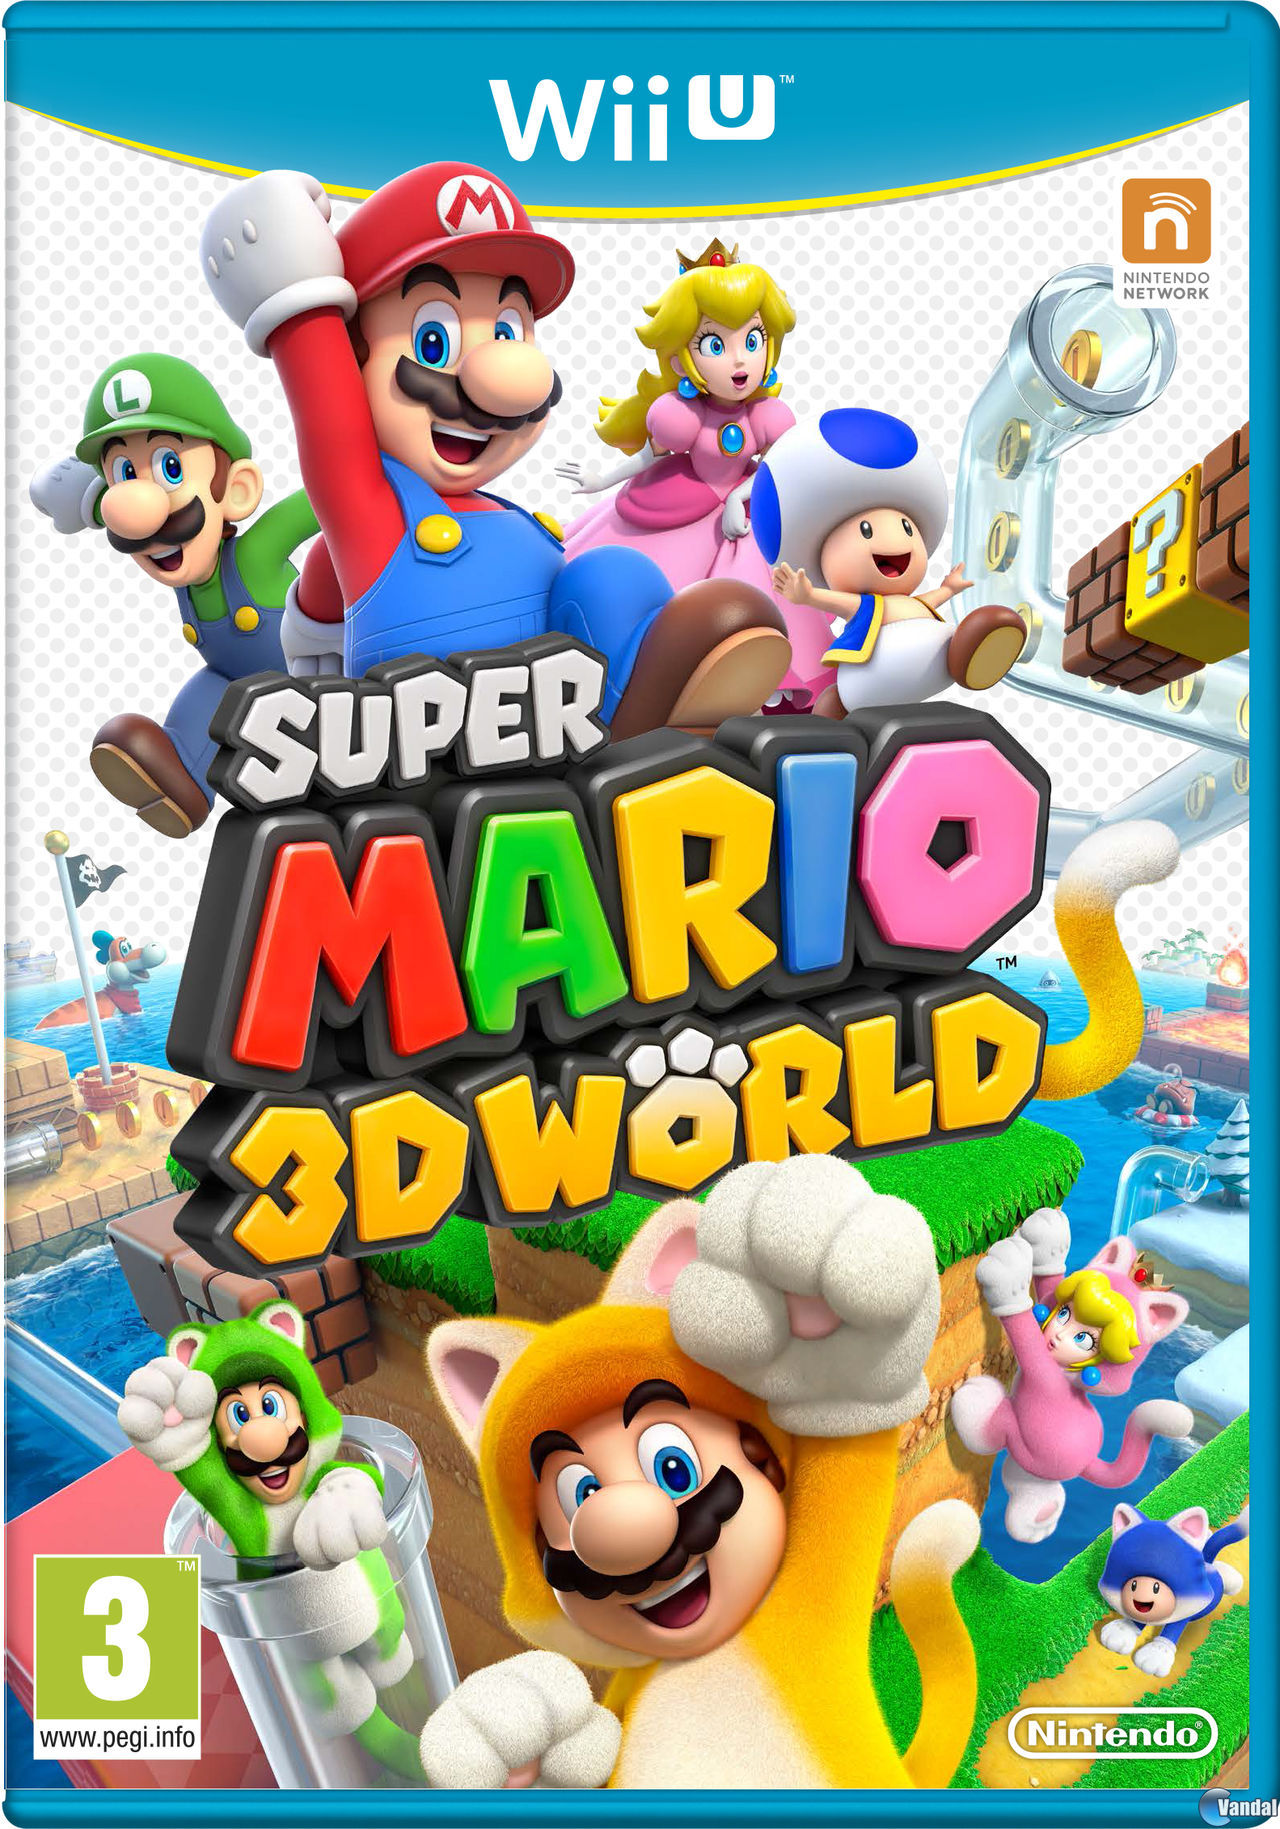 super mario 3d world download pc gratis